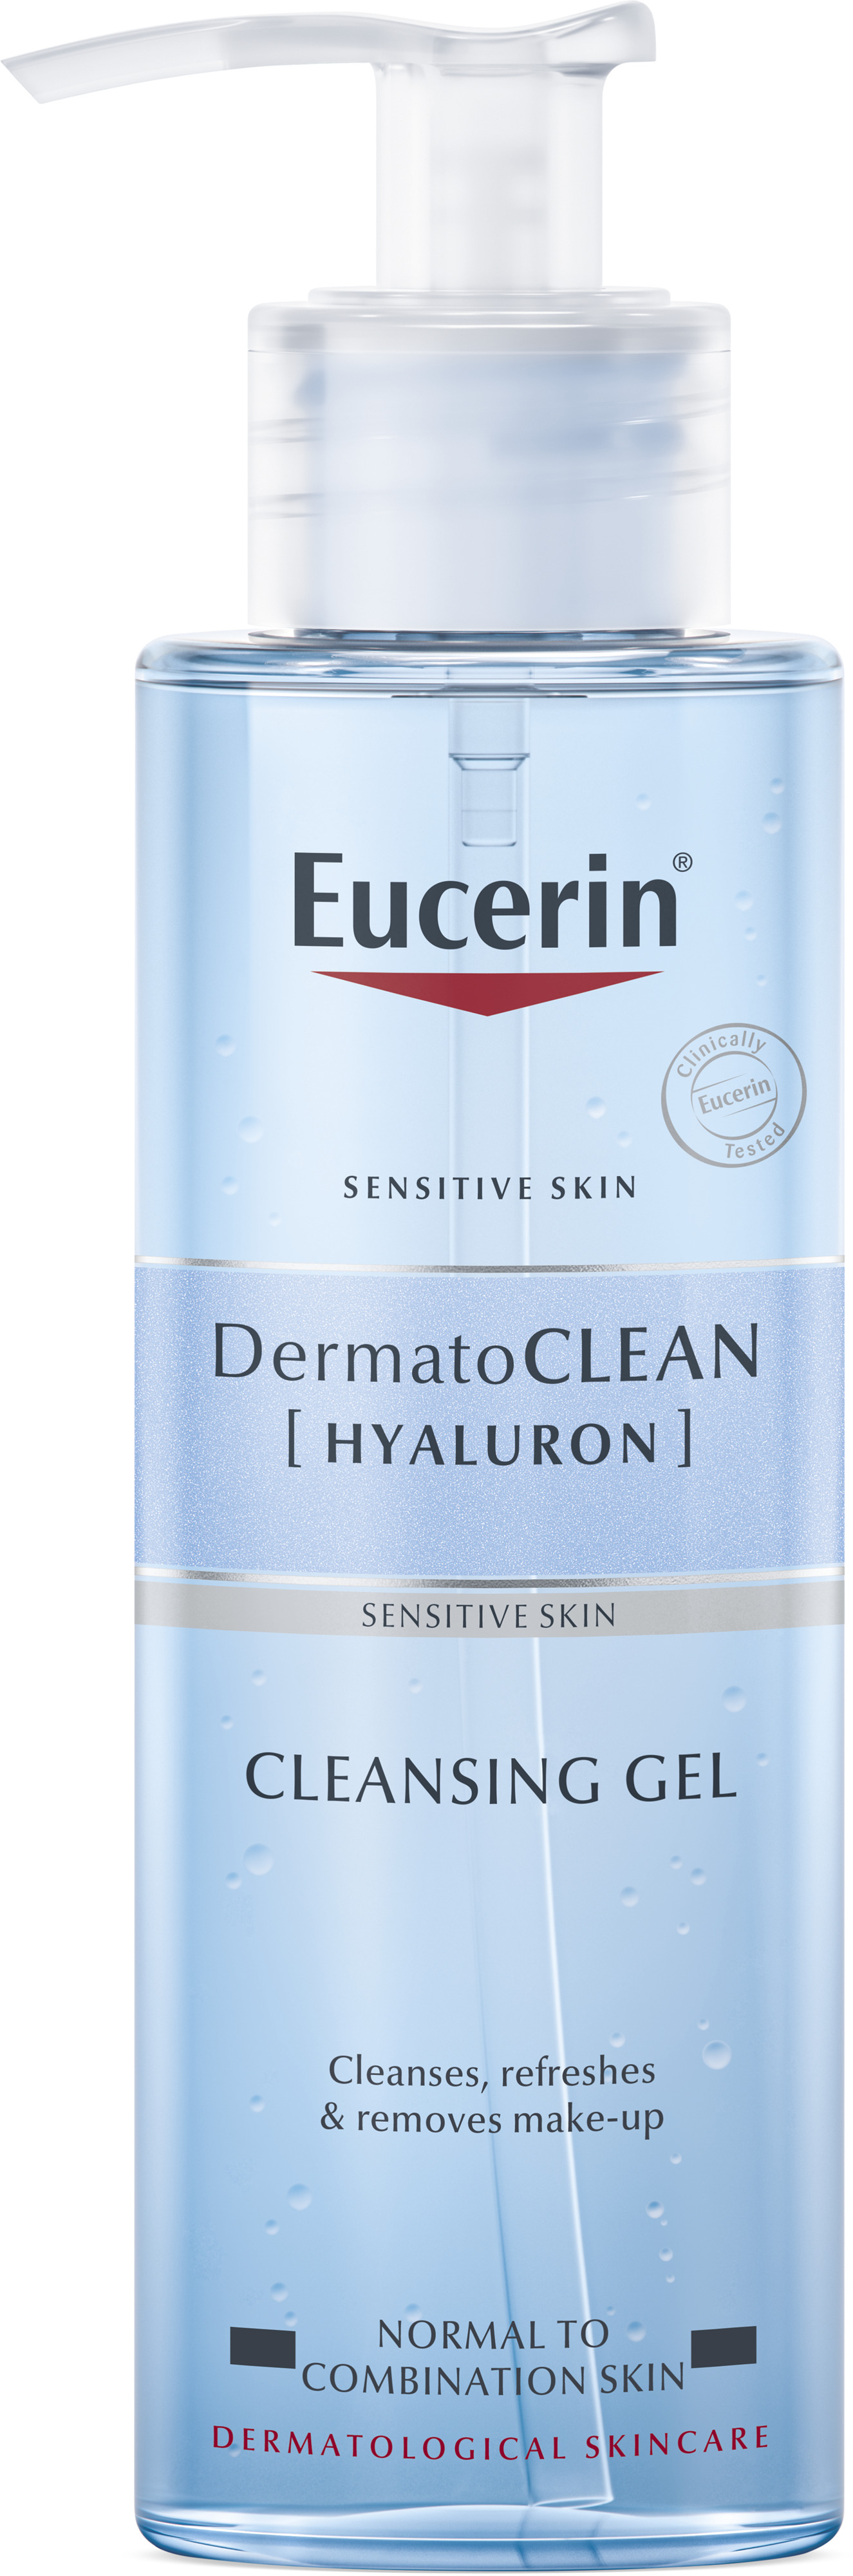 Eucerin DermatoCLEAN Cleansing Gel 200 ml